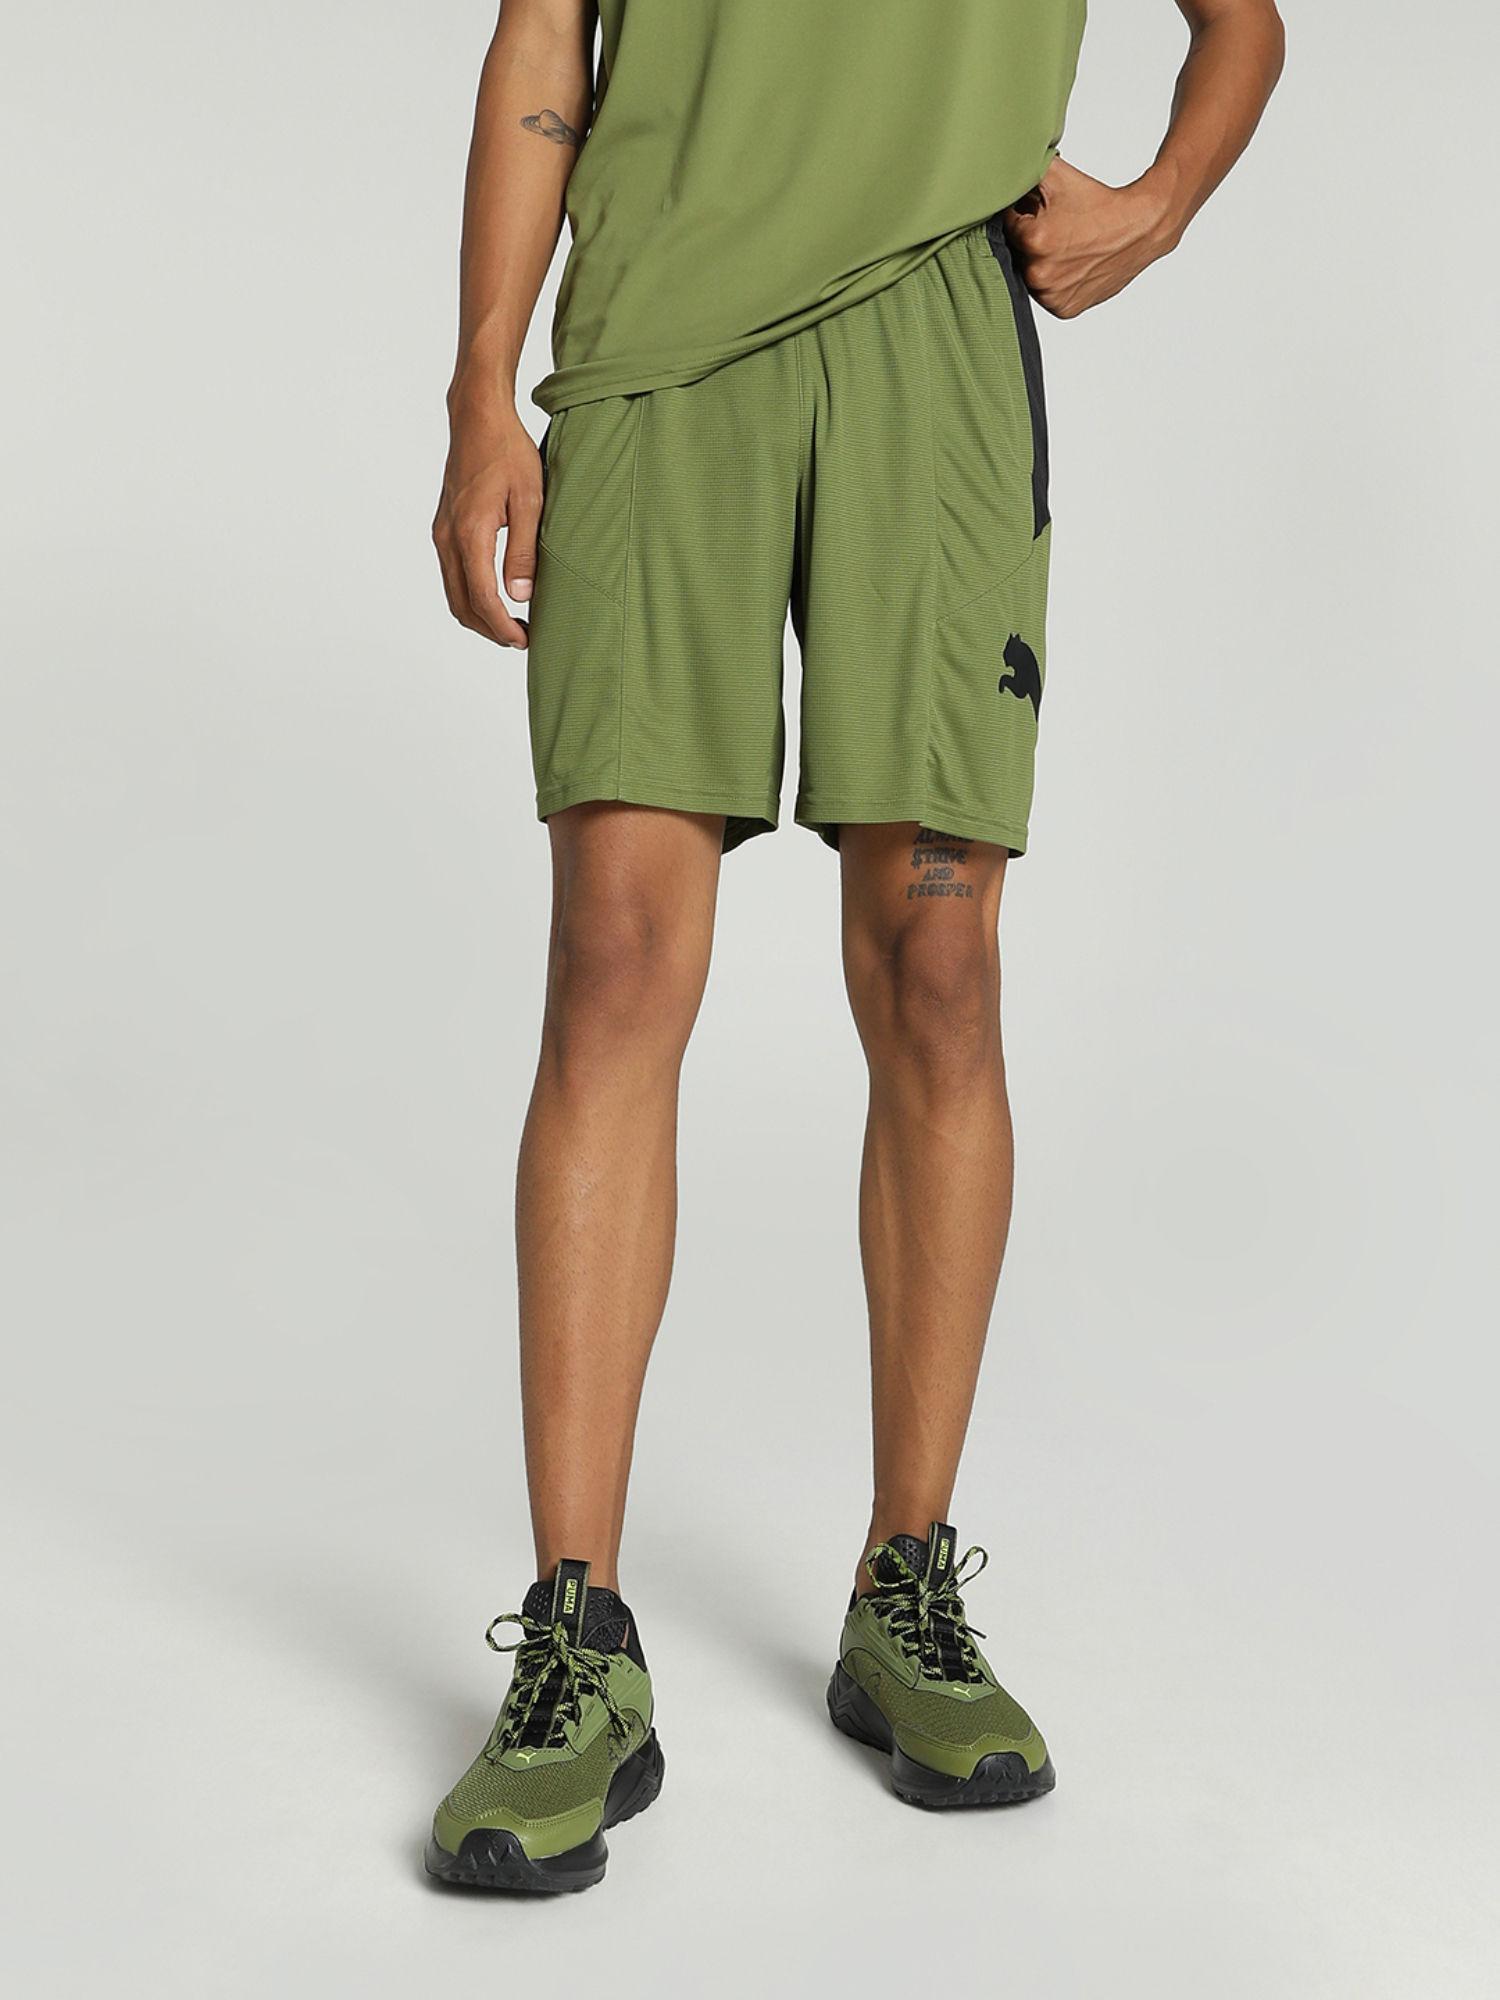 train-fav-cat-knit-8-mens-olive-green-shorts